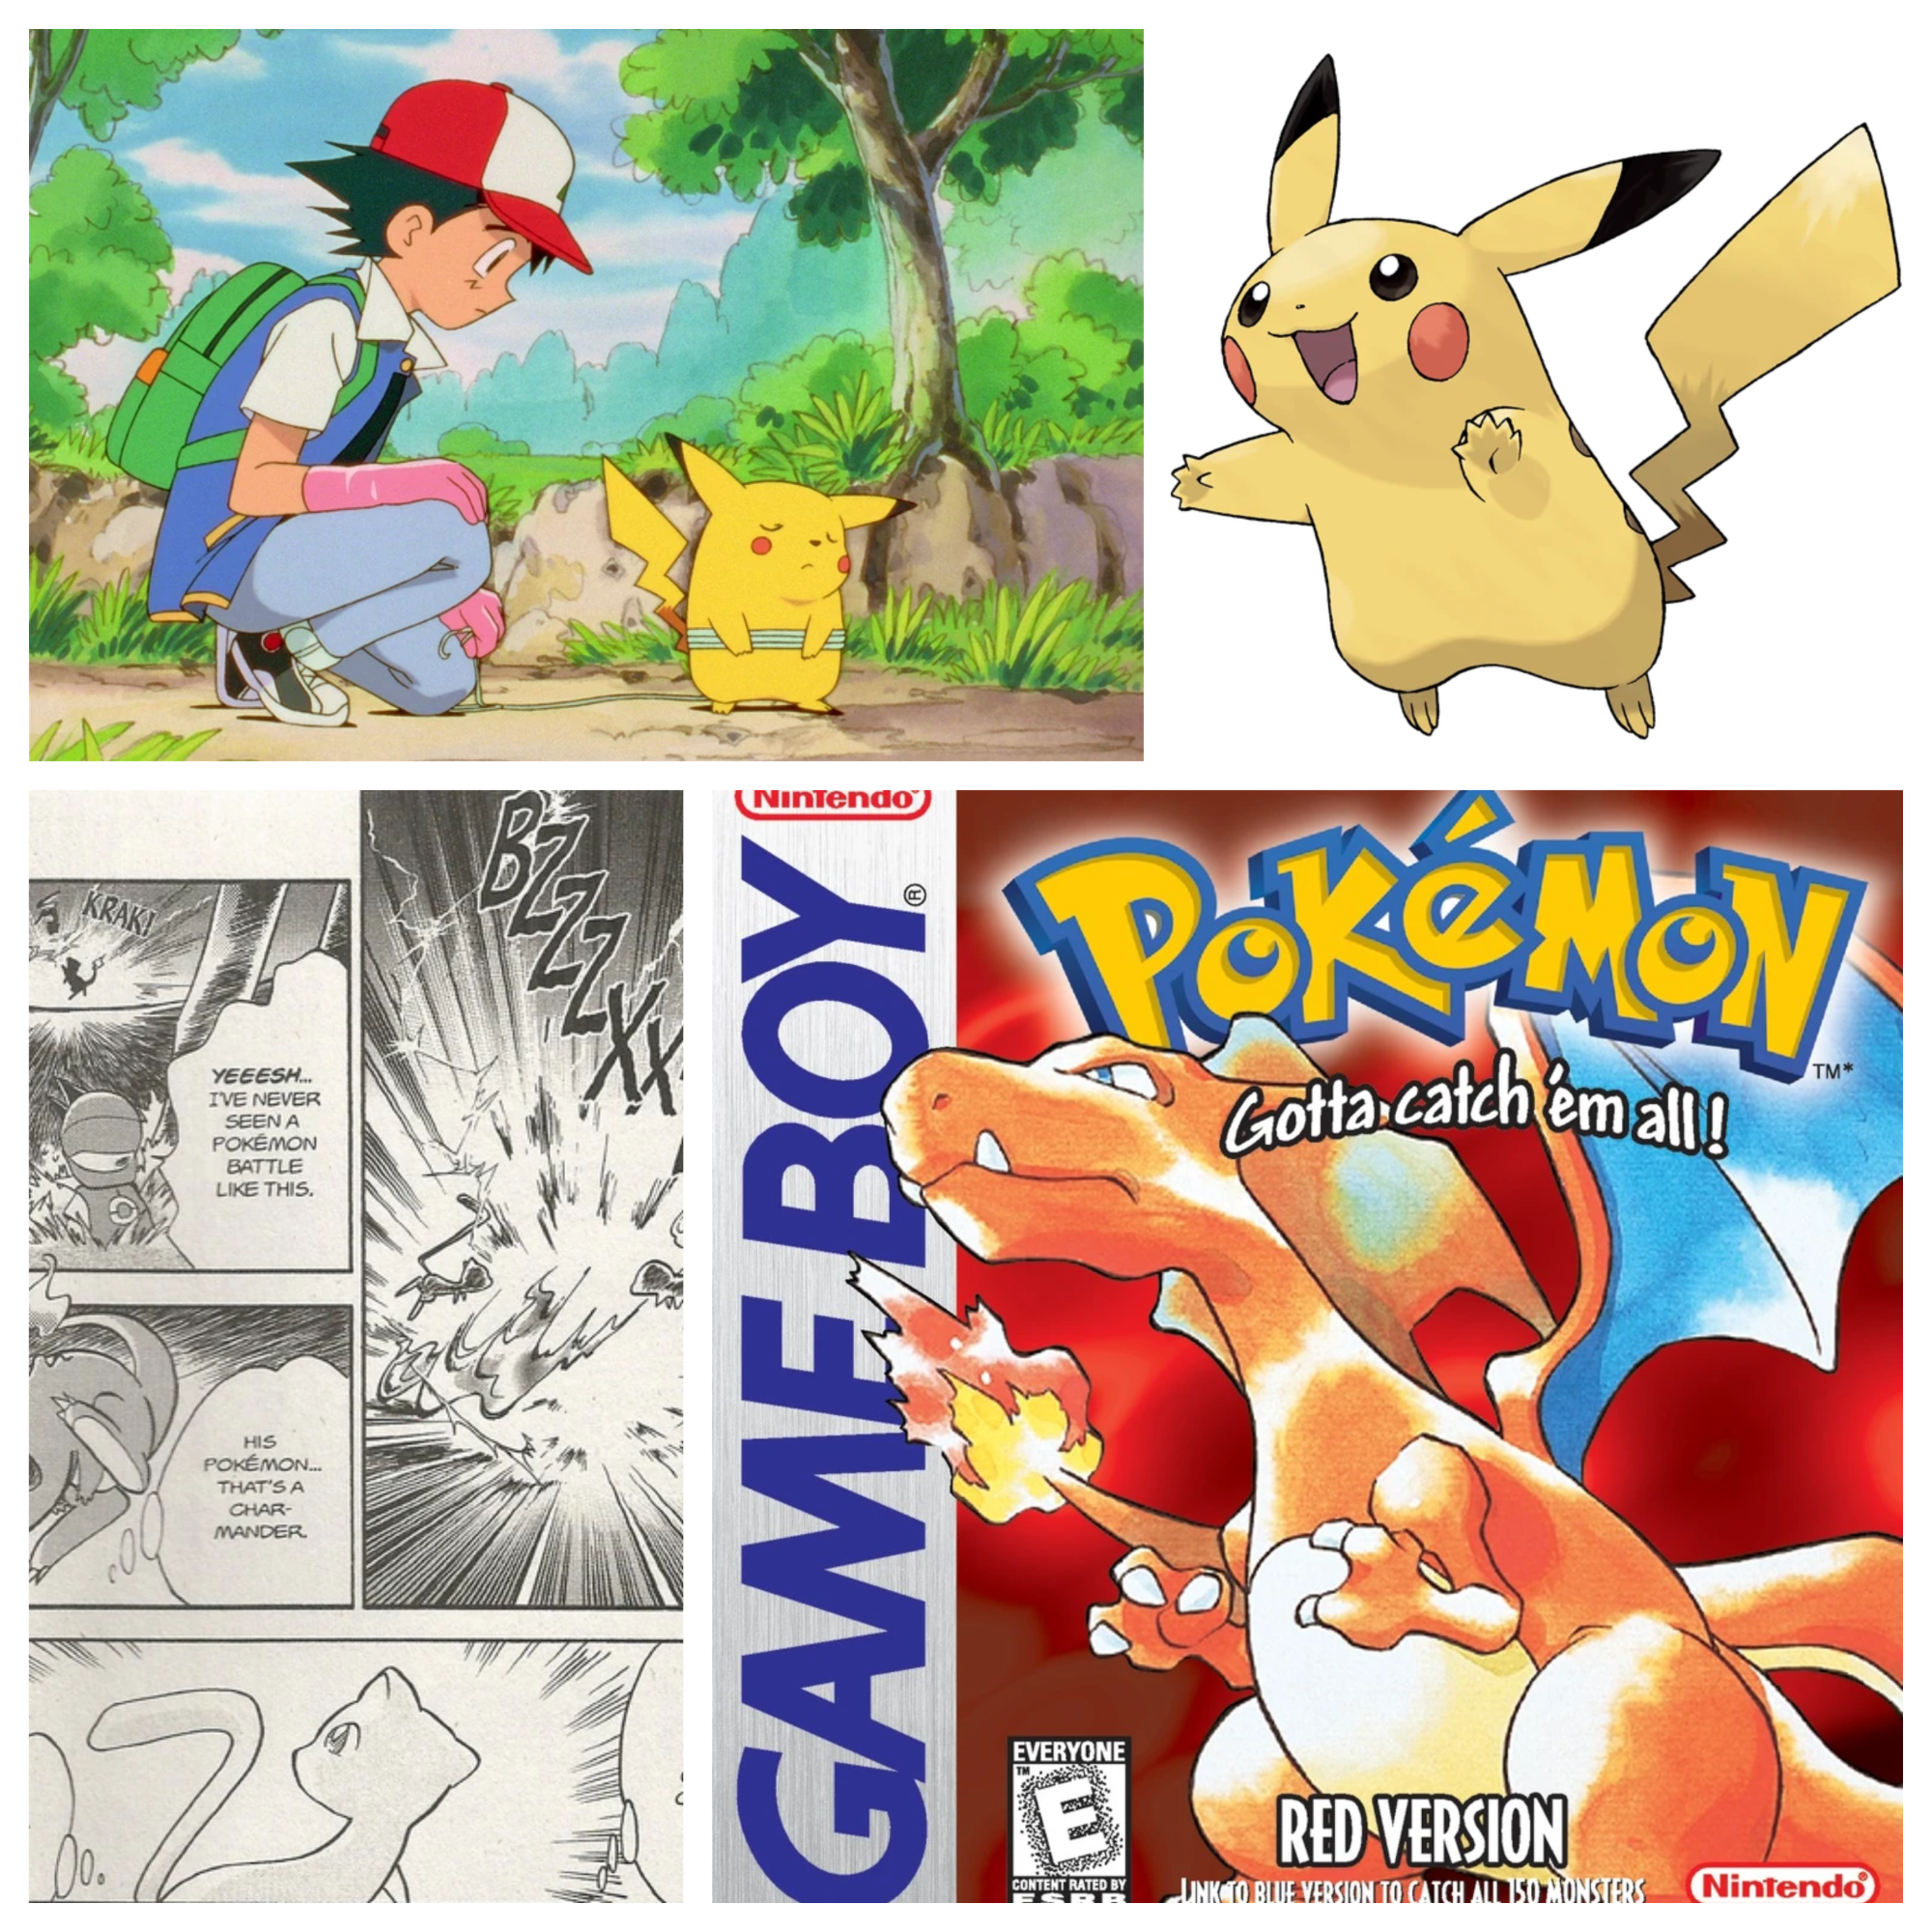 Pokemon Red, Game Boy, Enhanced, all 151 Original Pokemon Living